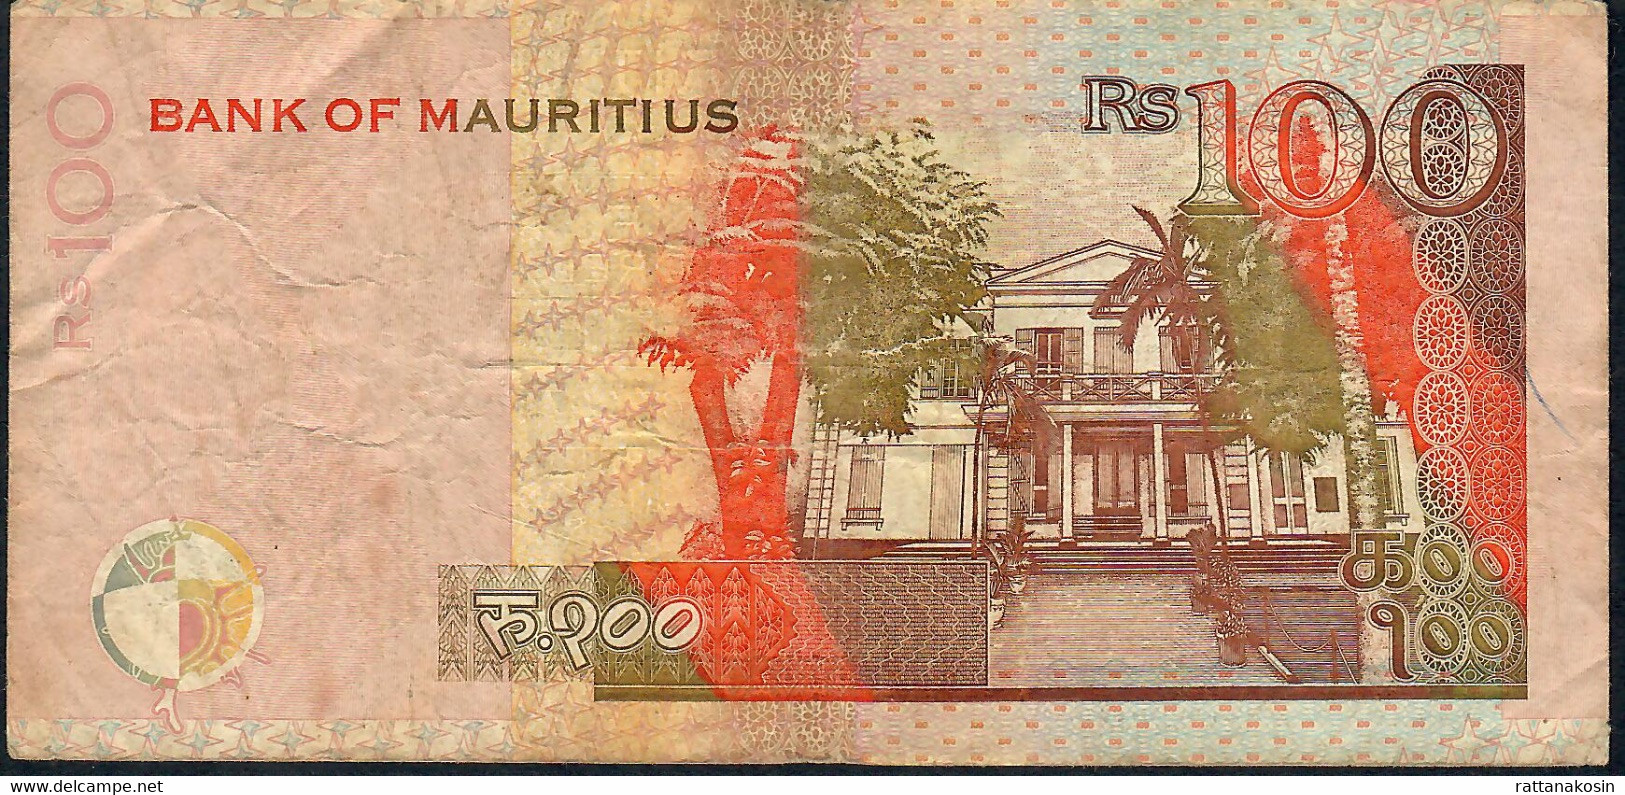 MAURITIUS P51b 100 RUPEES 2001 #BB FINE - Maurice